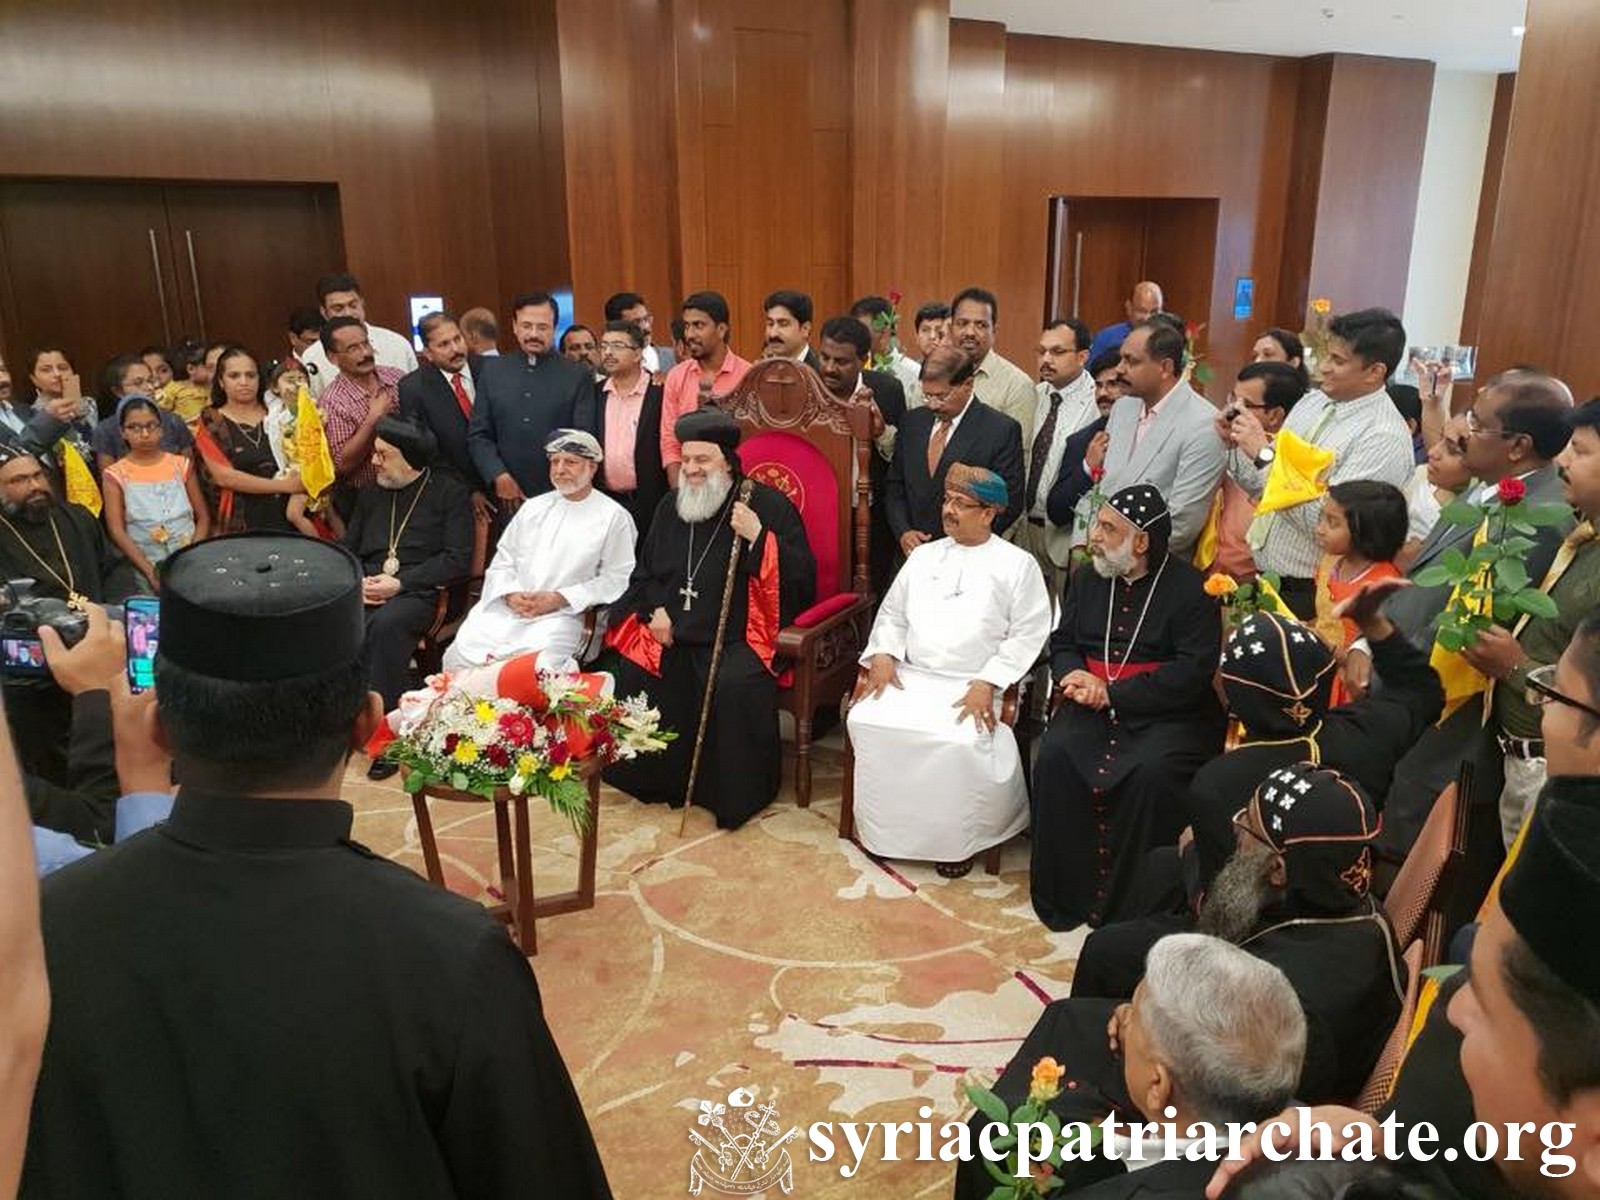 Reception held for Patriarch Mor Ignatius Aphrem Il in Muscat